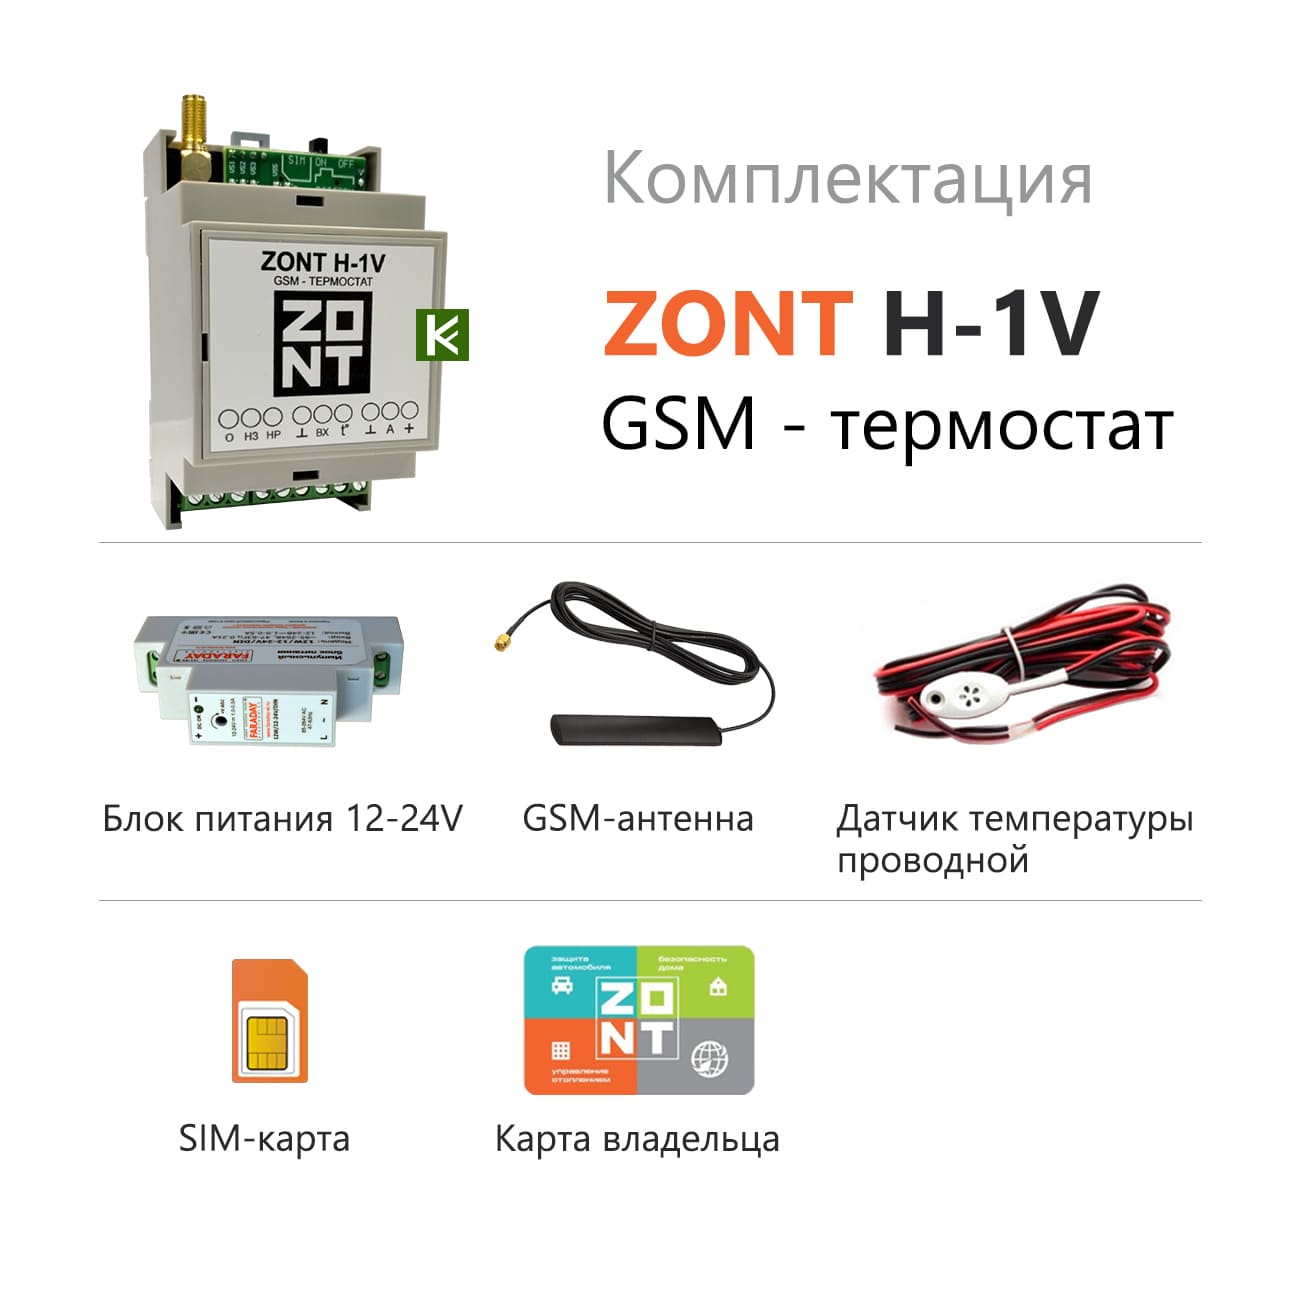 Zont h подключения. GSM-термостат Zont h-1v. Термостат GSM-climate Zont-h1. Термостат GSM-climate Zont-h1 (112015). GSM-термостат Zont h-1.